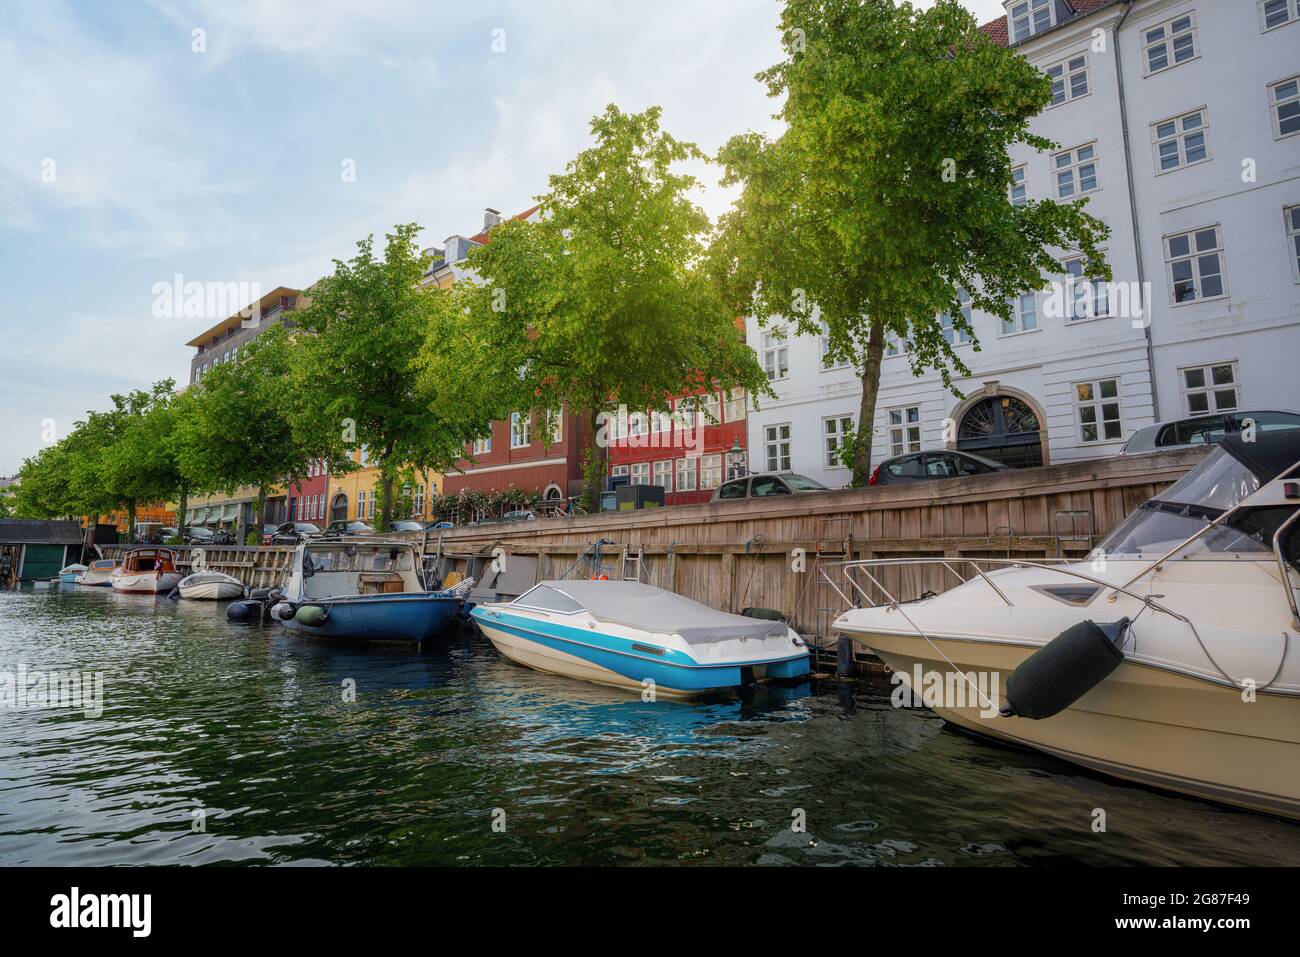 Canal and boats in Christianshavn - Copenhagen, Denmark Stock Photo